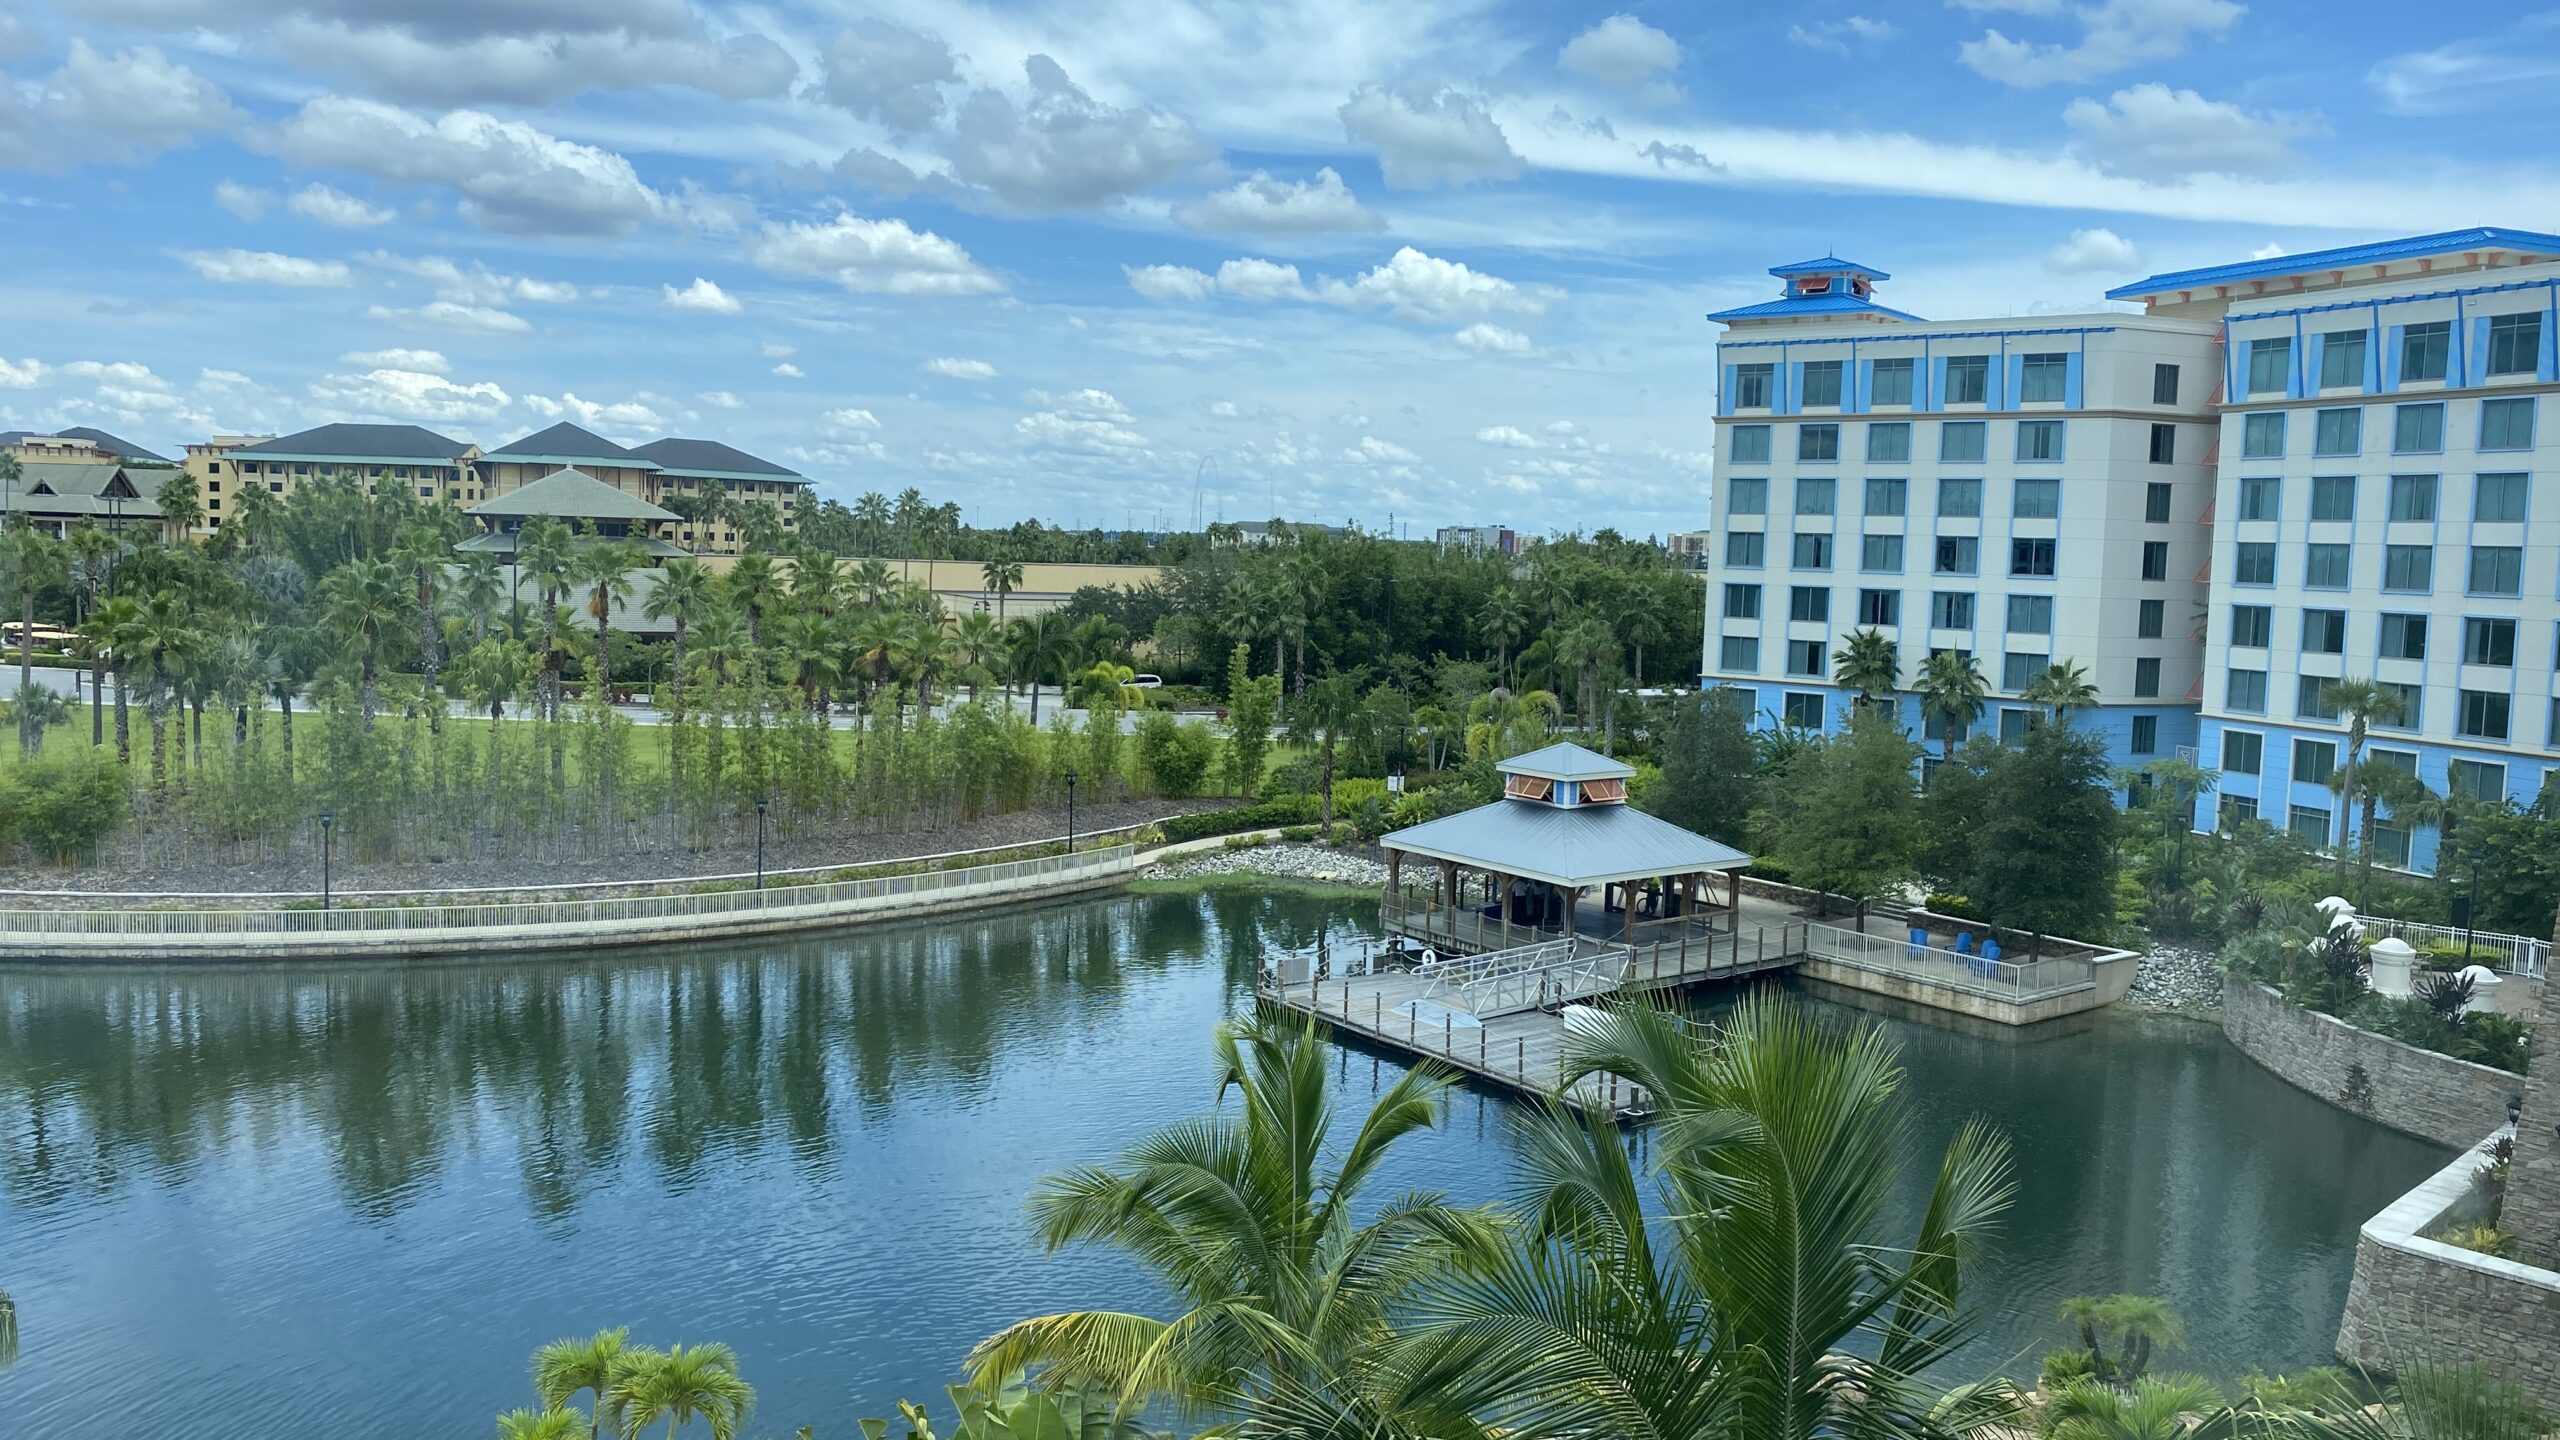 Loews Sapphire Falls Resort at Universal Orlando set to reopen on May 18th